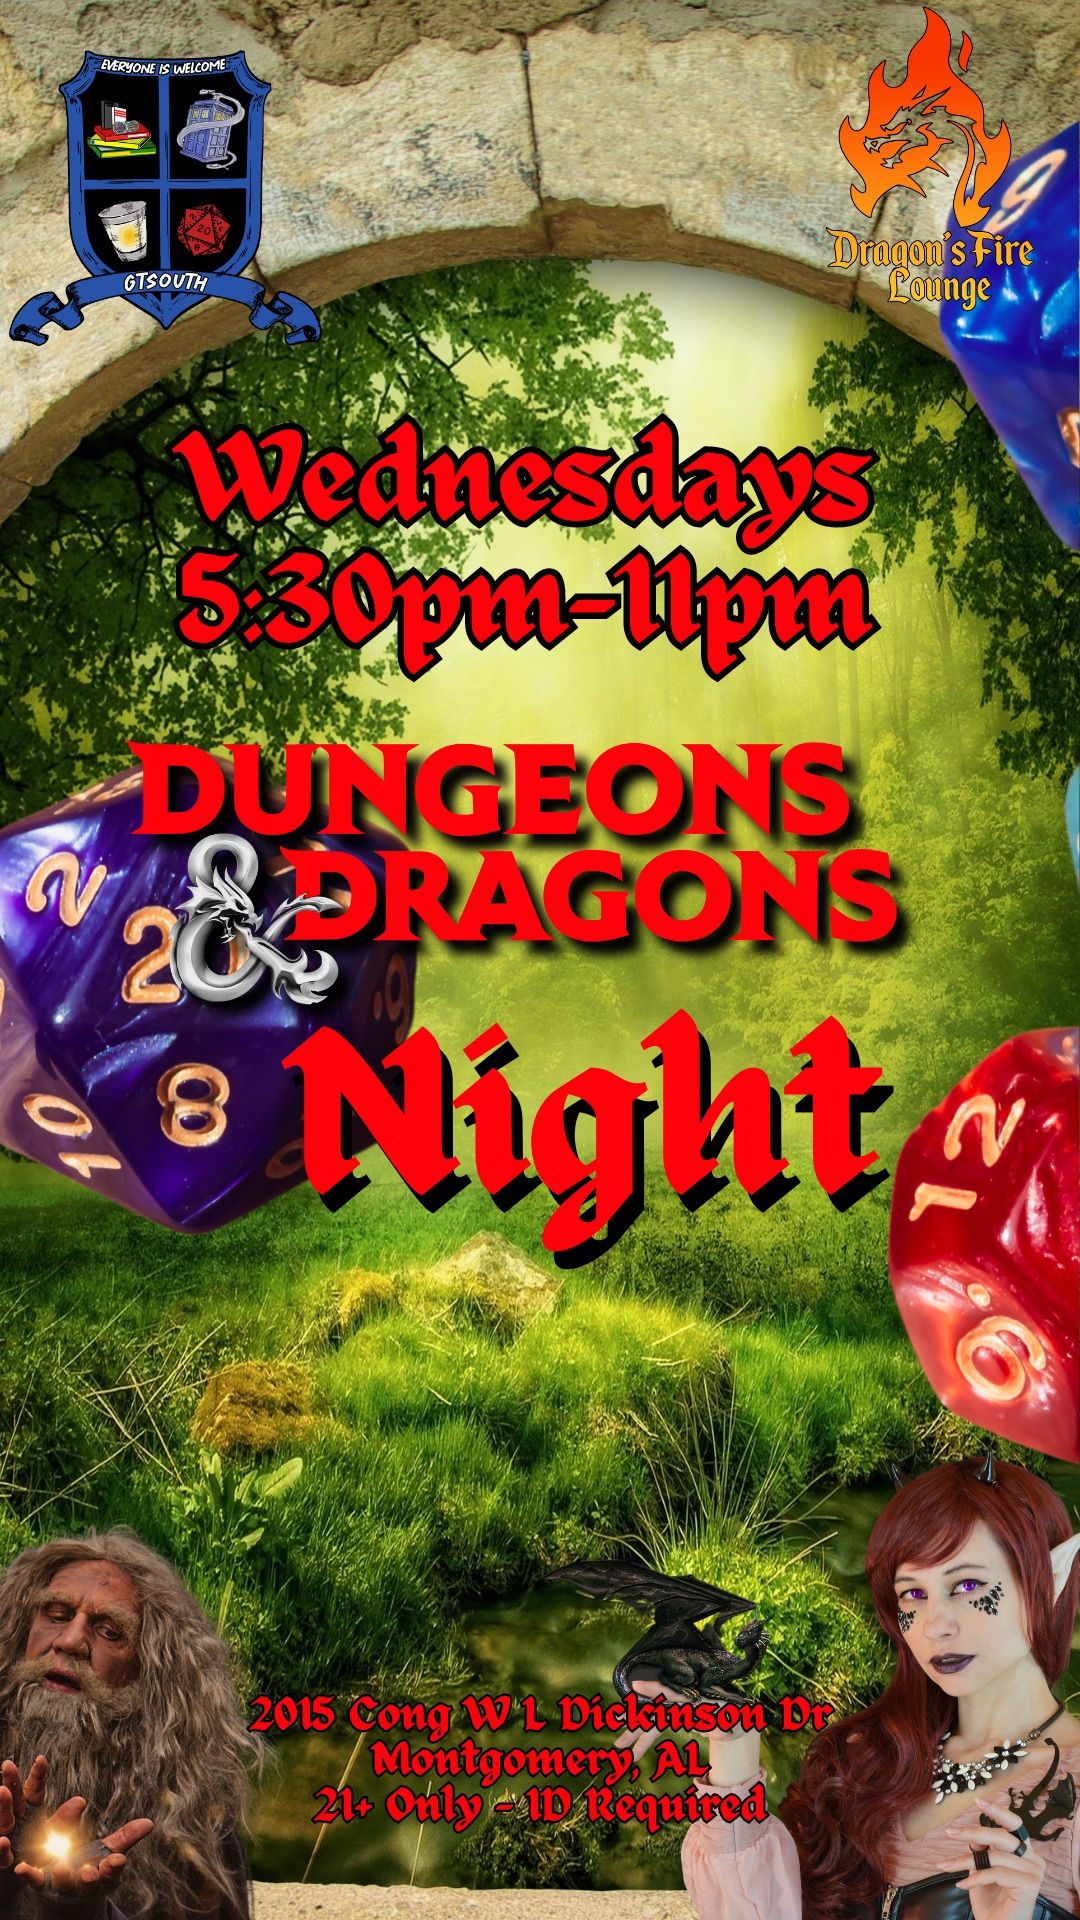 Dungeons & Dragons Wednesdays